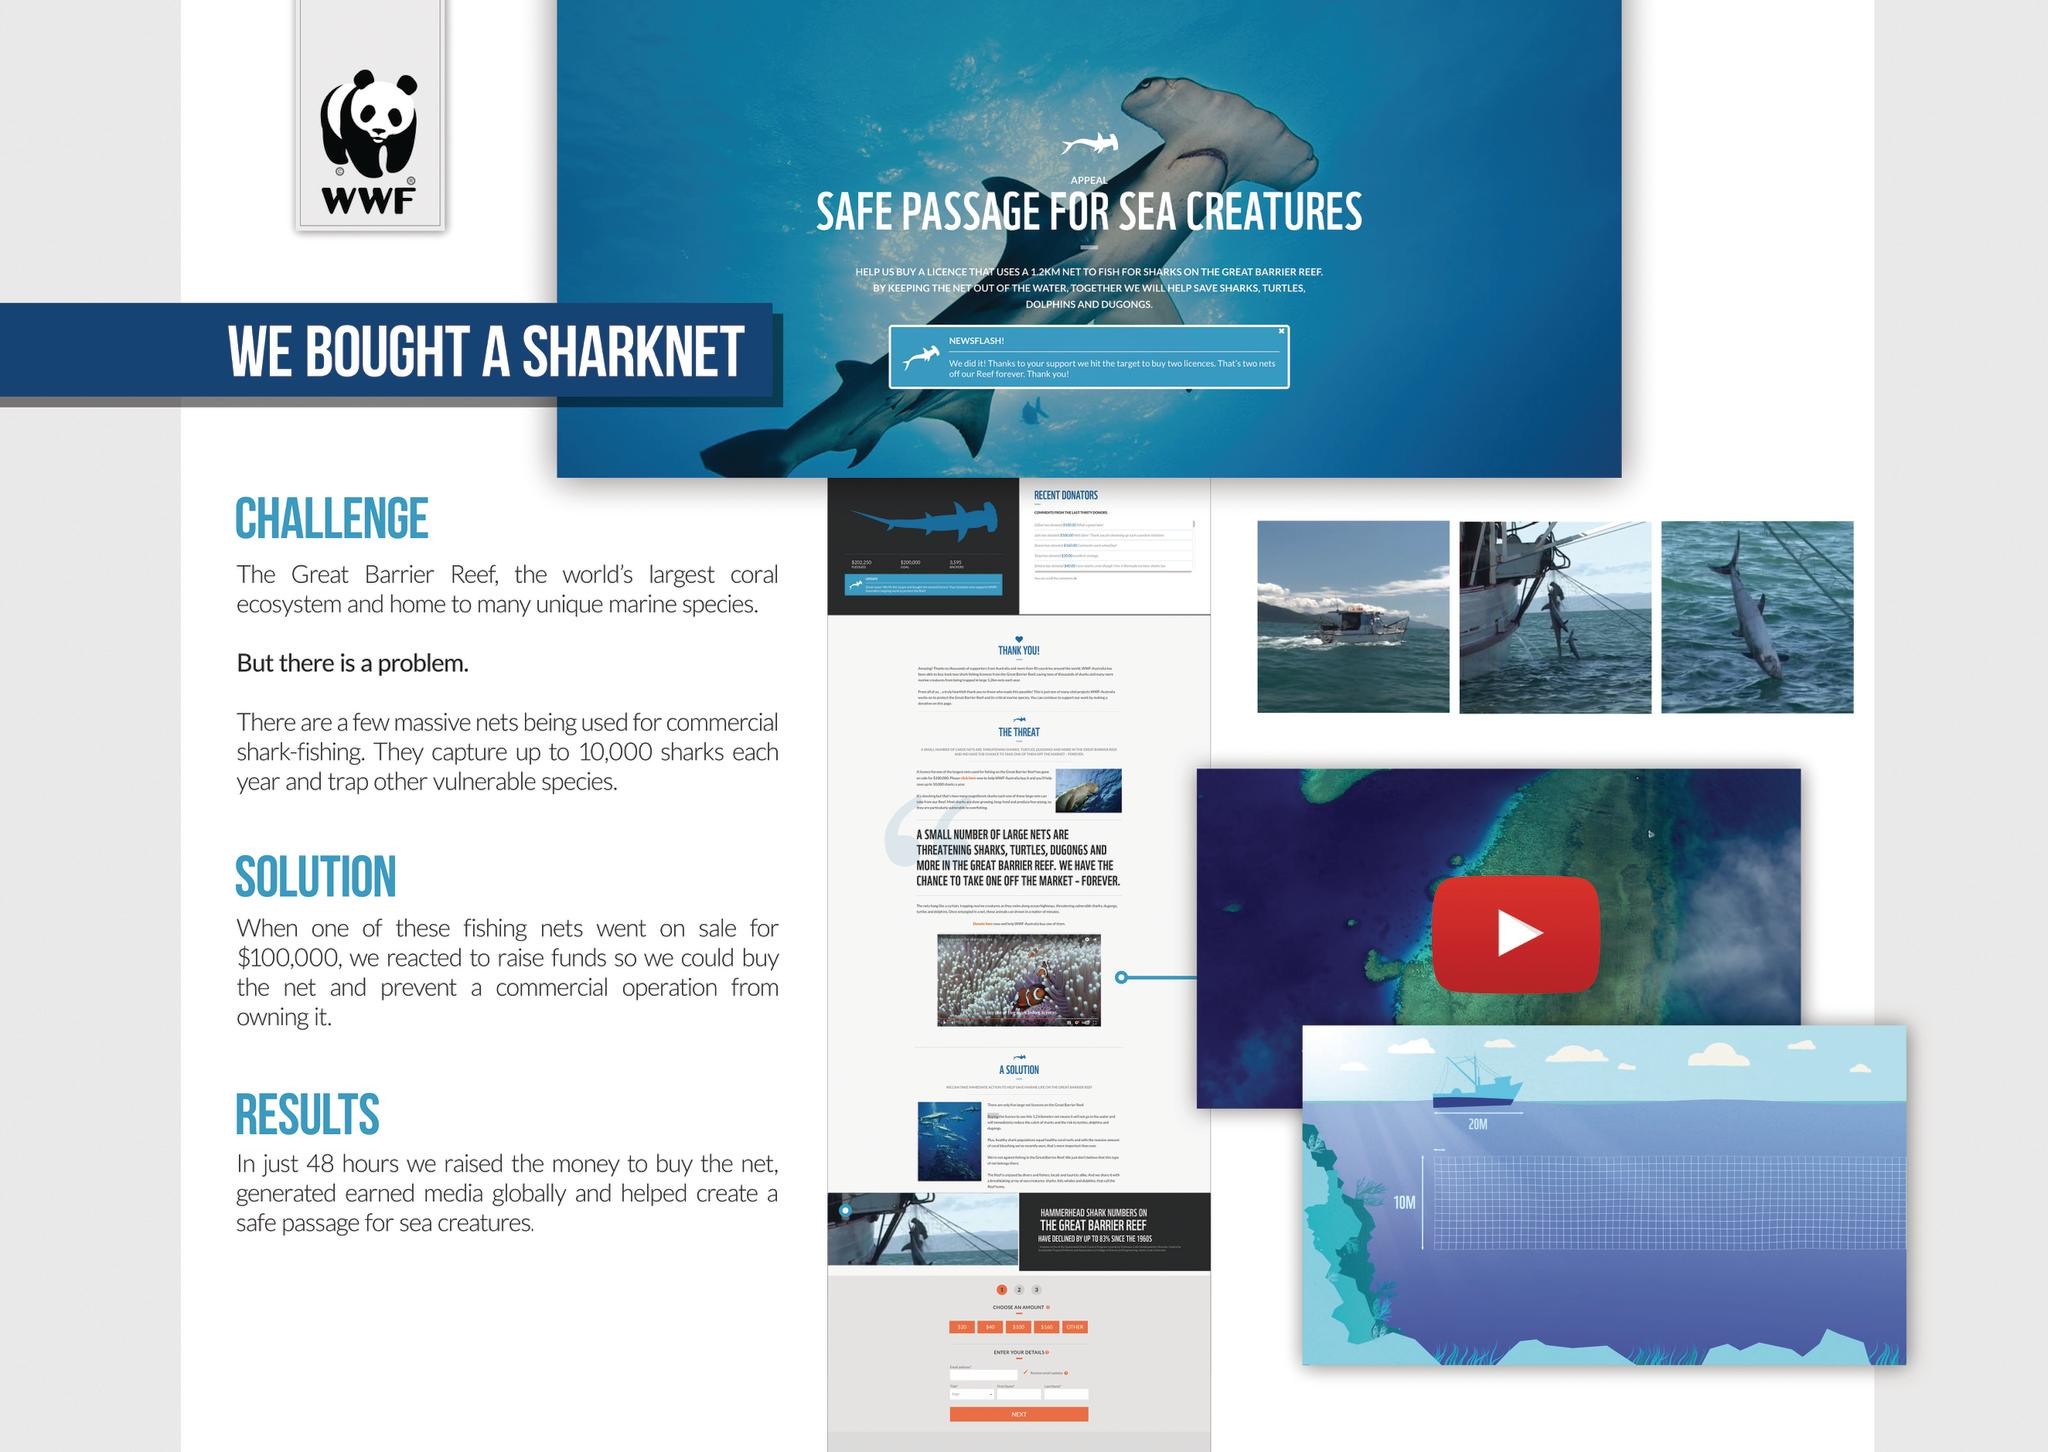 World Wildlife Fund "Safe Passage for Sea Creatures"